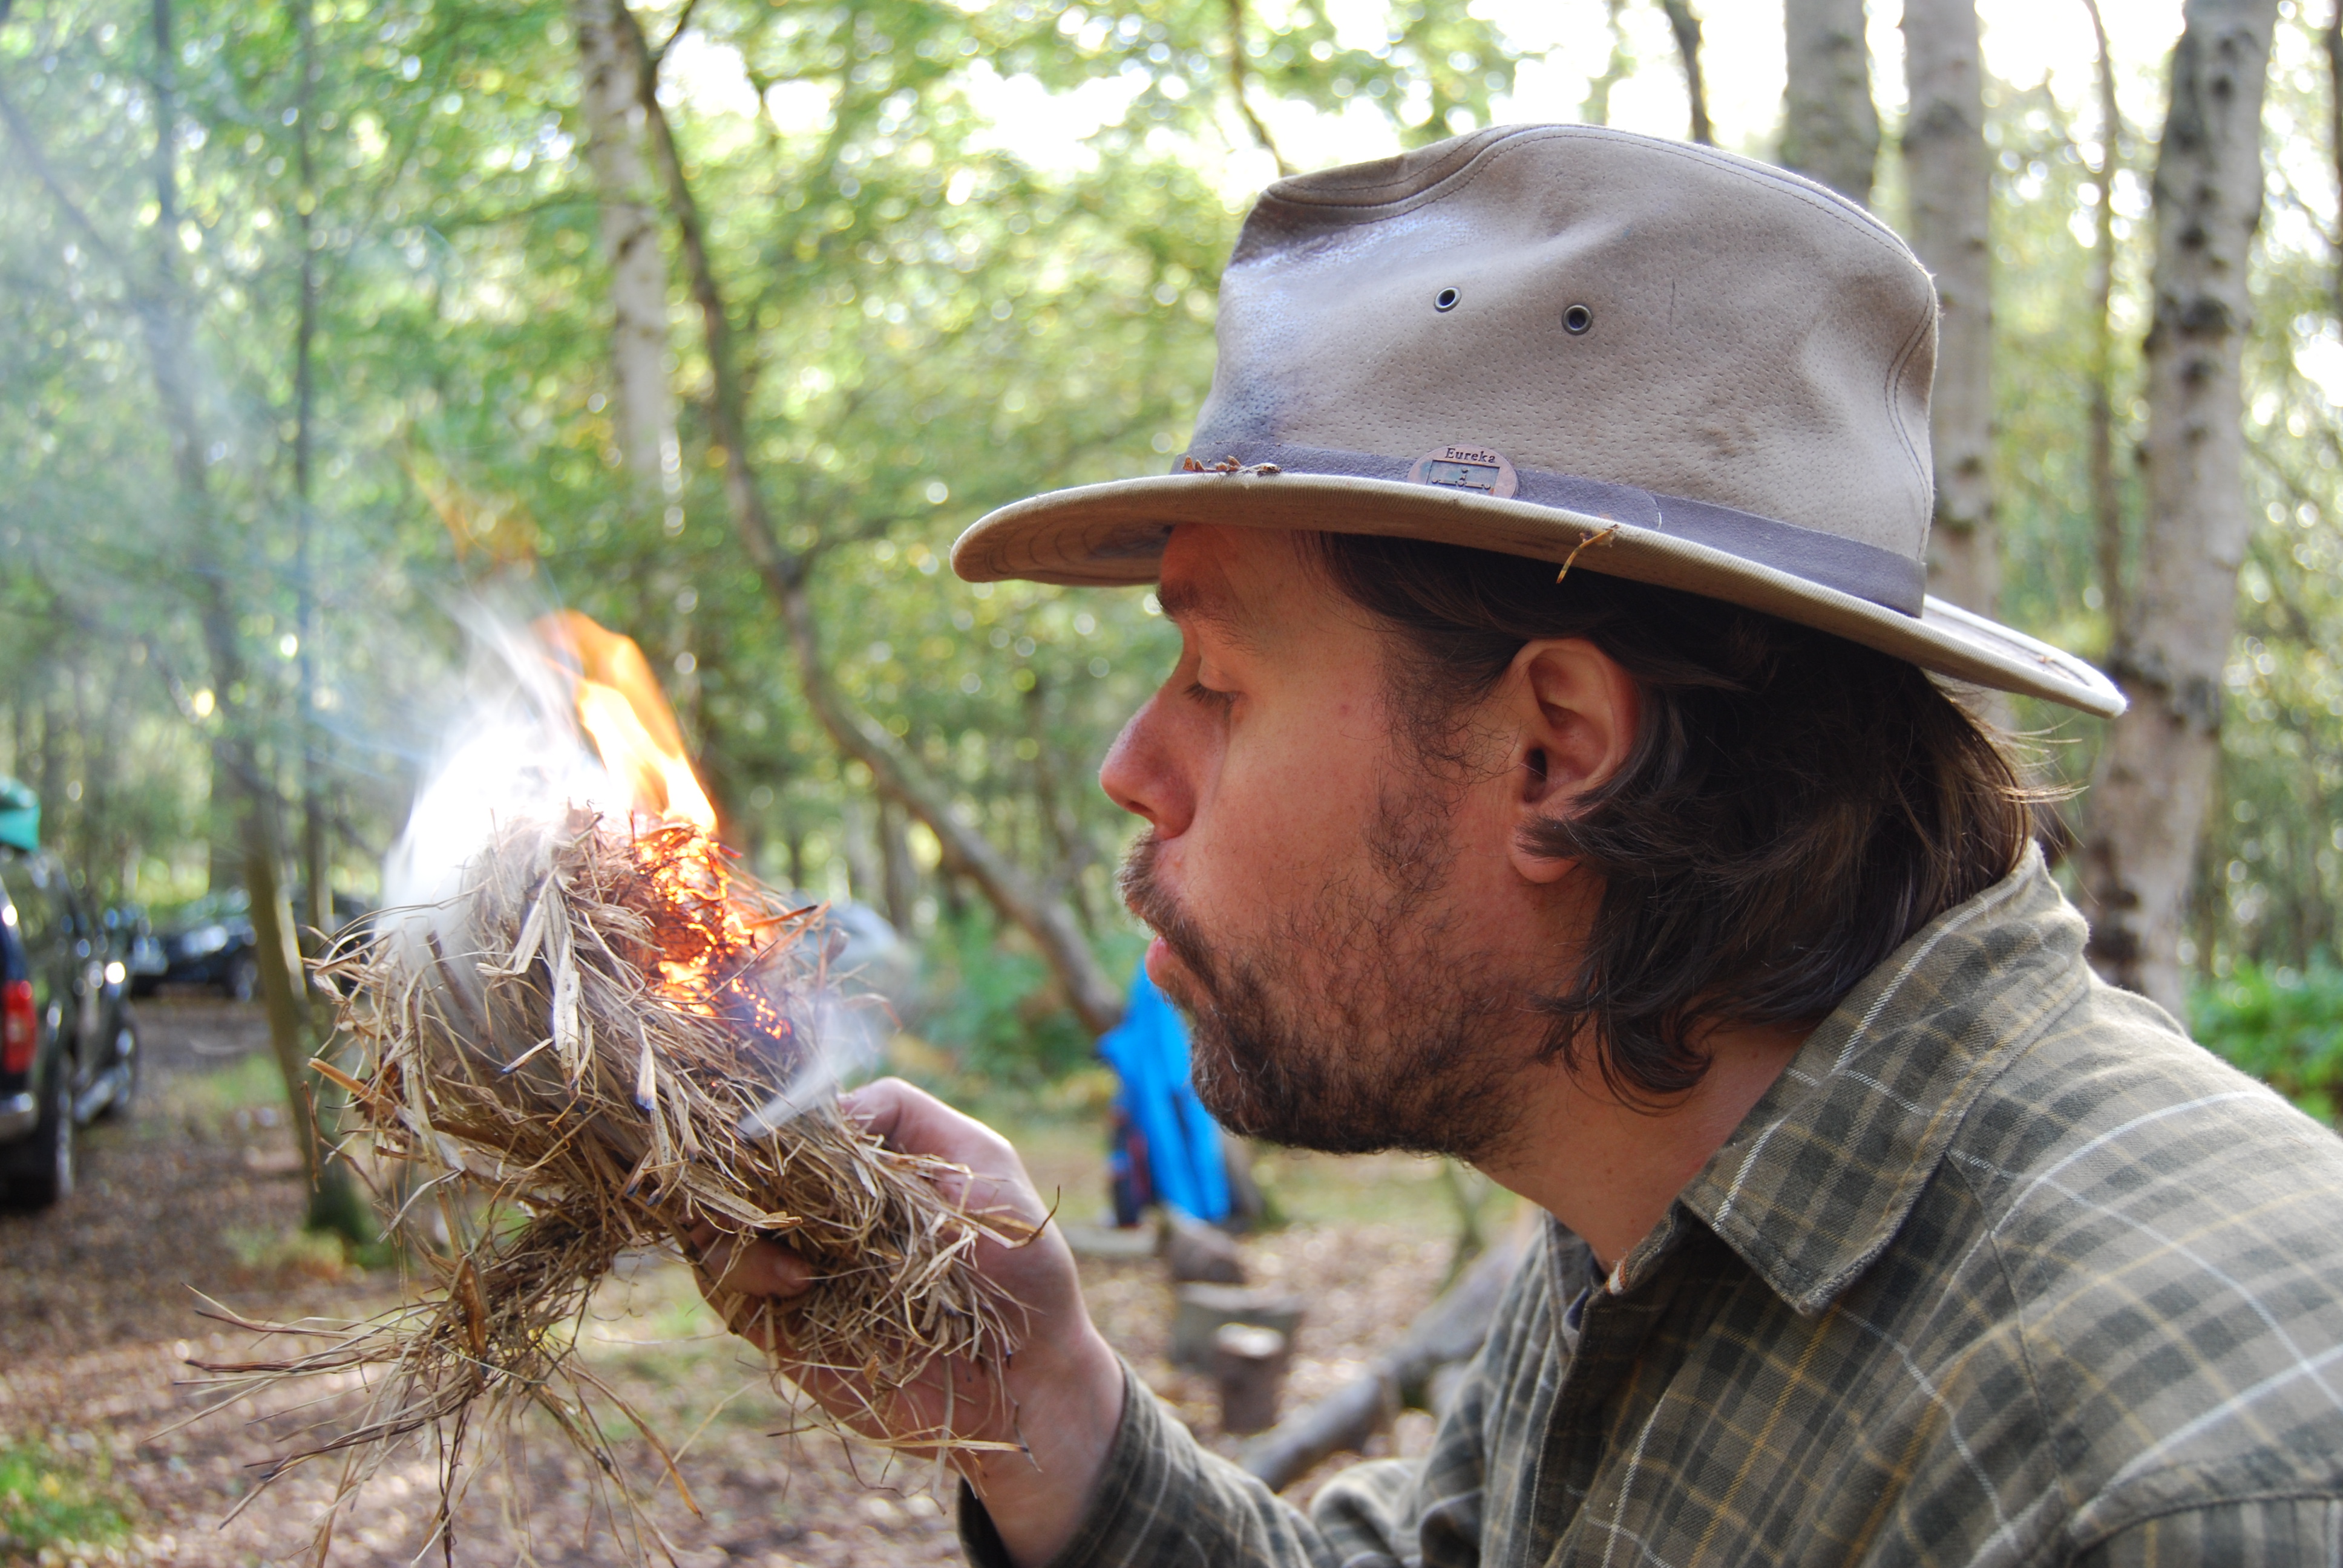 “Camp fire” cuisine inspires new generation of Bear Grylls explorers